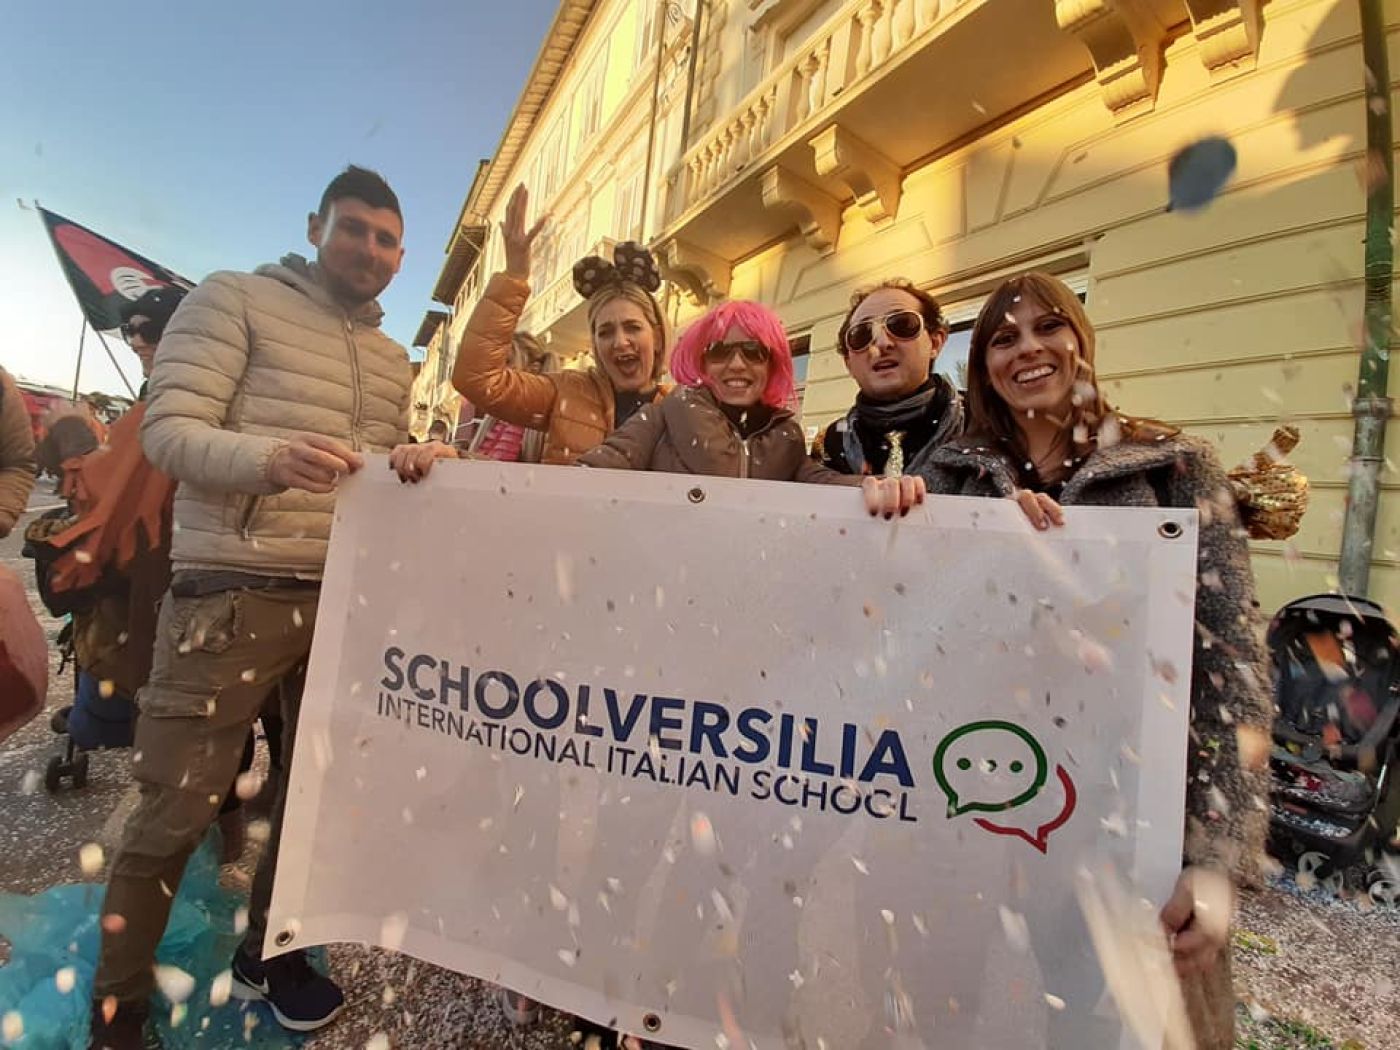 School Versilia: International Italian Language School